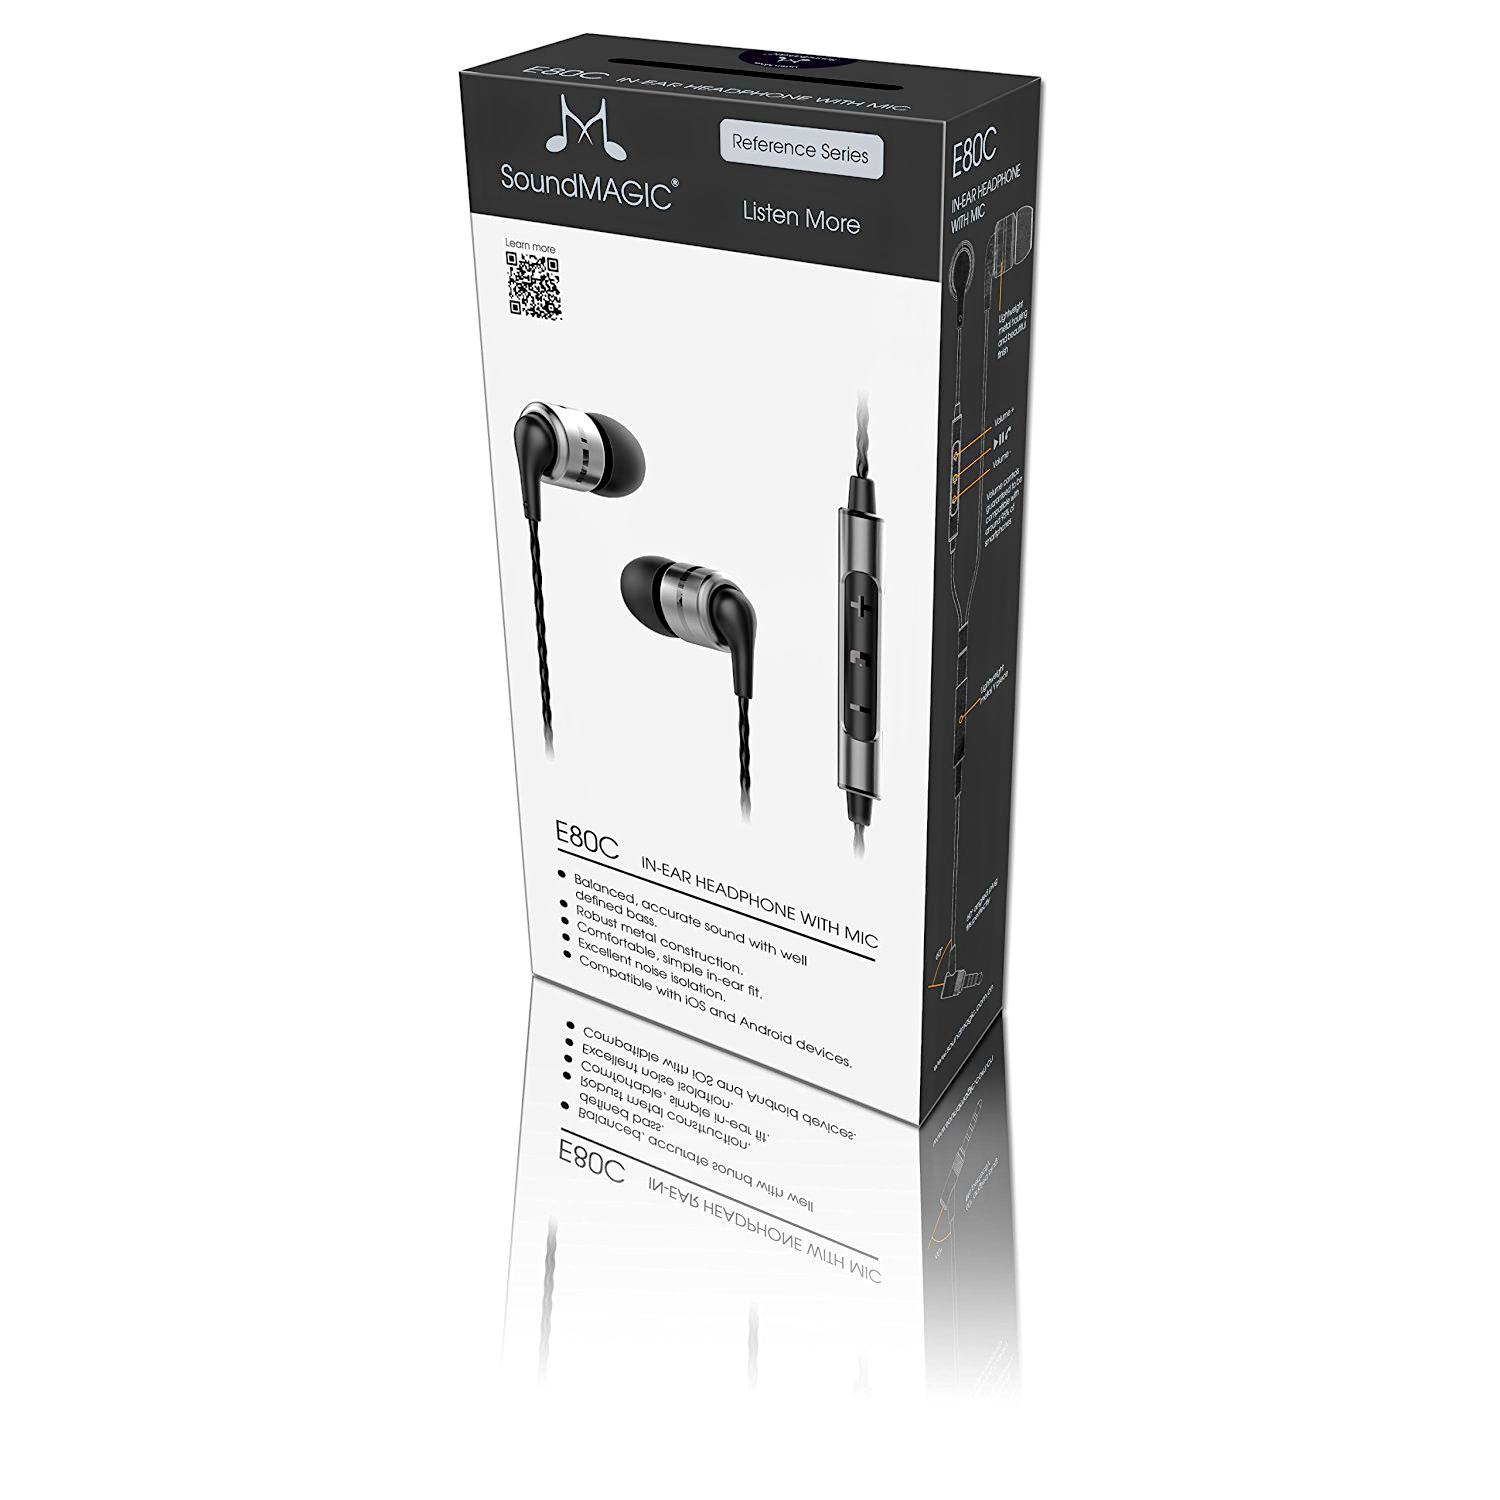 Soundmagic E80C หูฟัง In-Ear Noise Isolating with Microphone มีไมค์ควบคุมเสียง สีดำ ของแท้ ประกันศูนย์ 1ปี (Black)